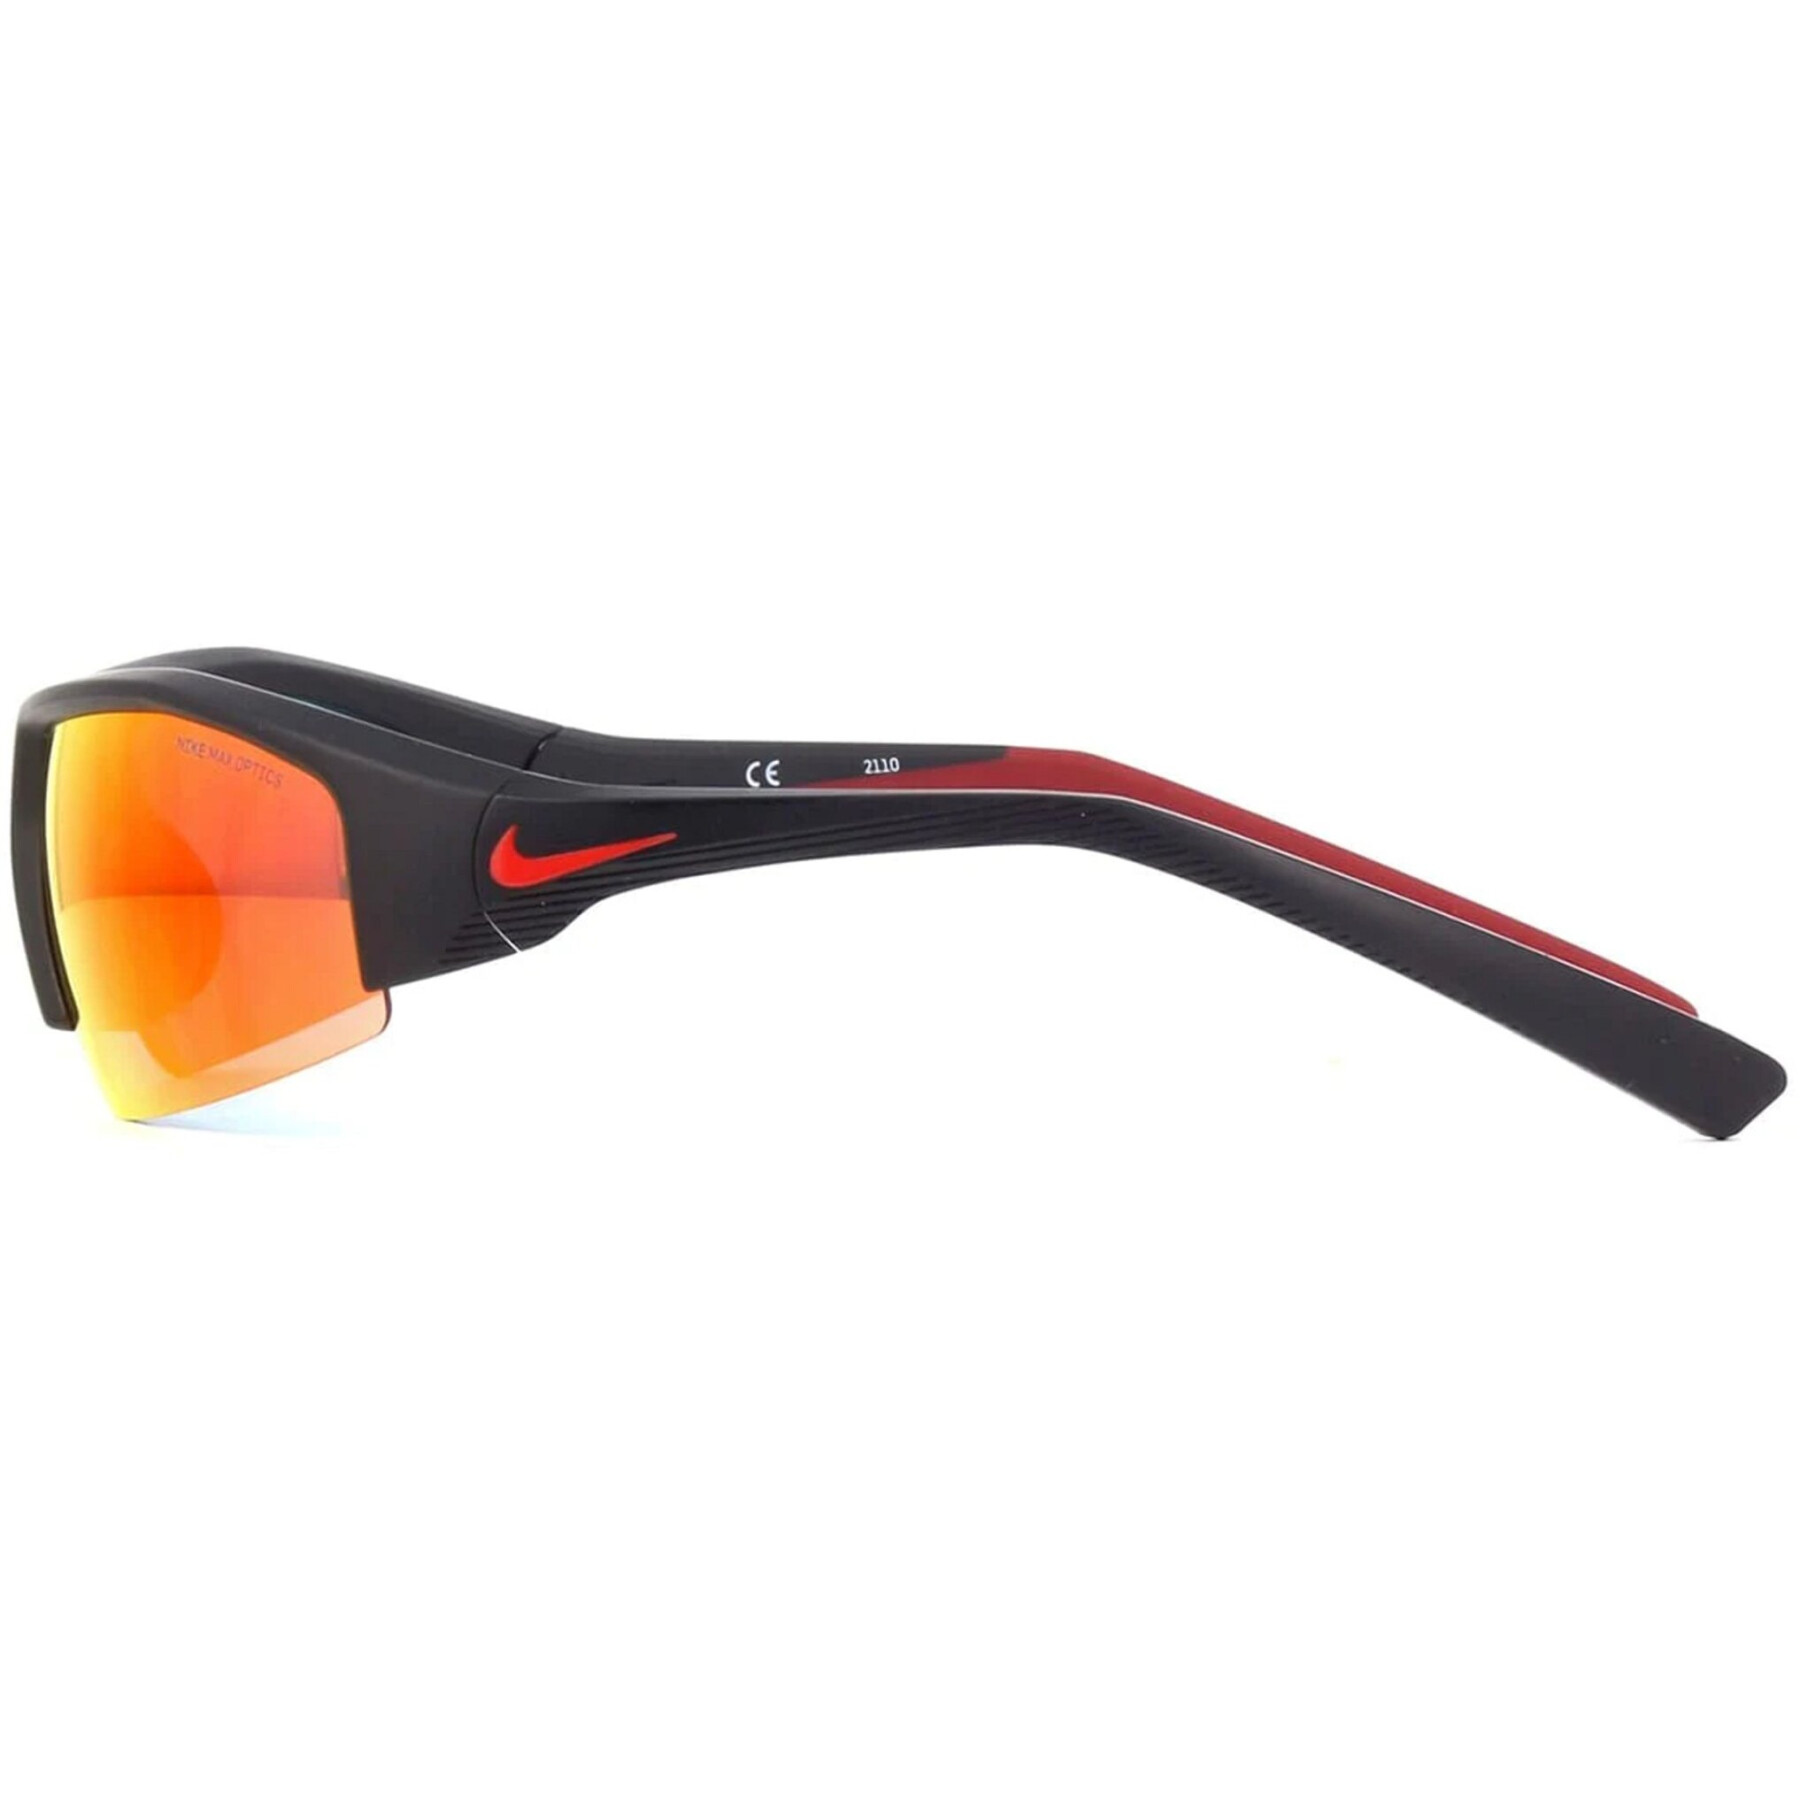 Sunglasses Nike SKYLONACE22MD